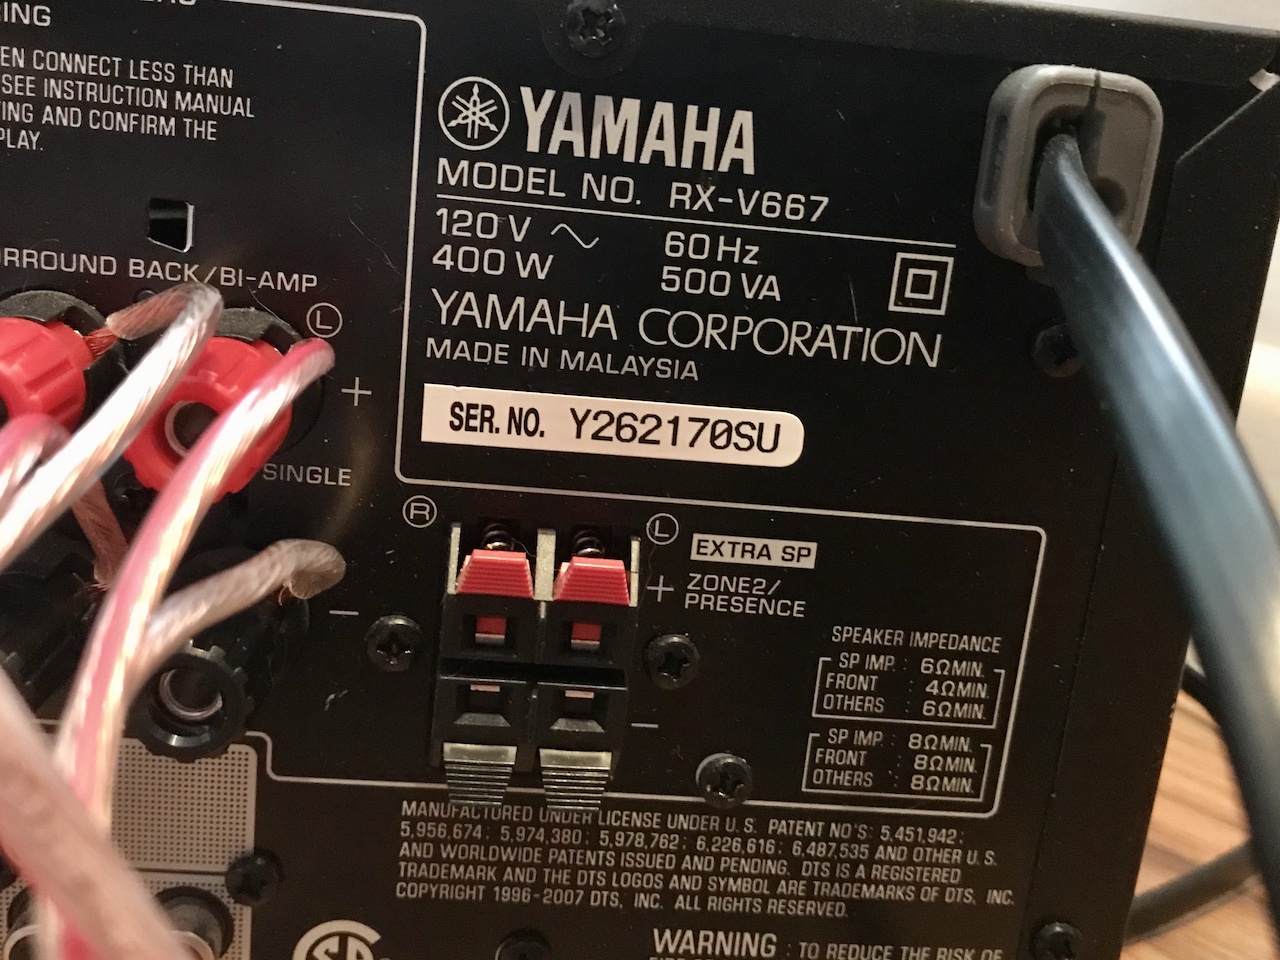 2 Yamaha Description.jpg